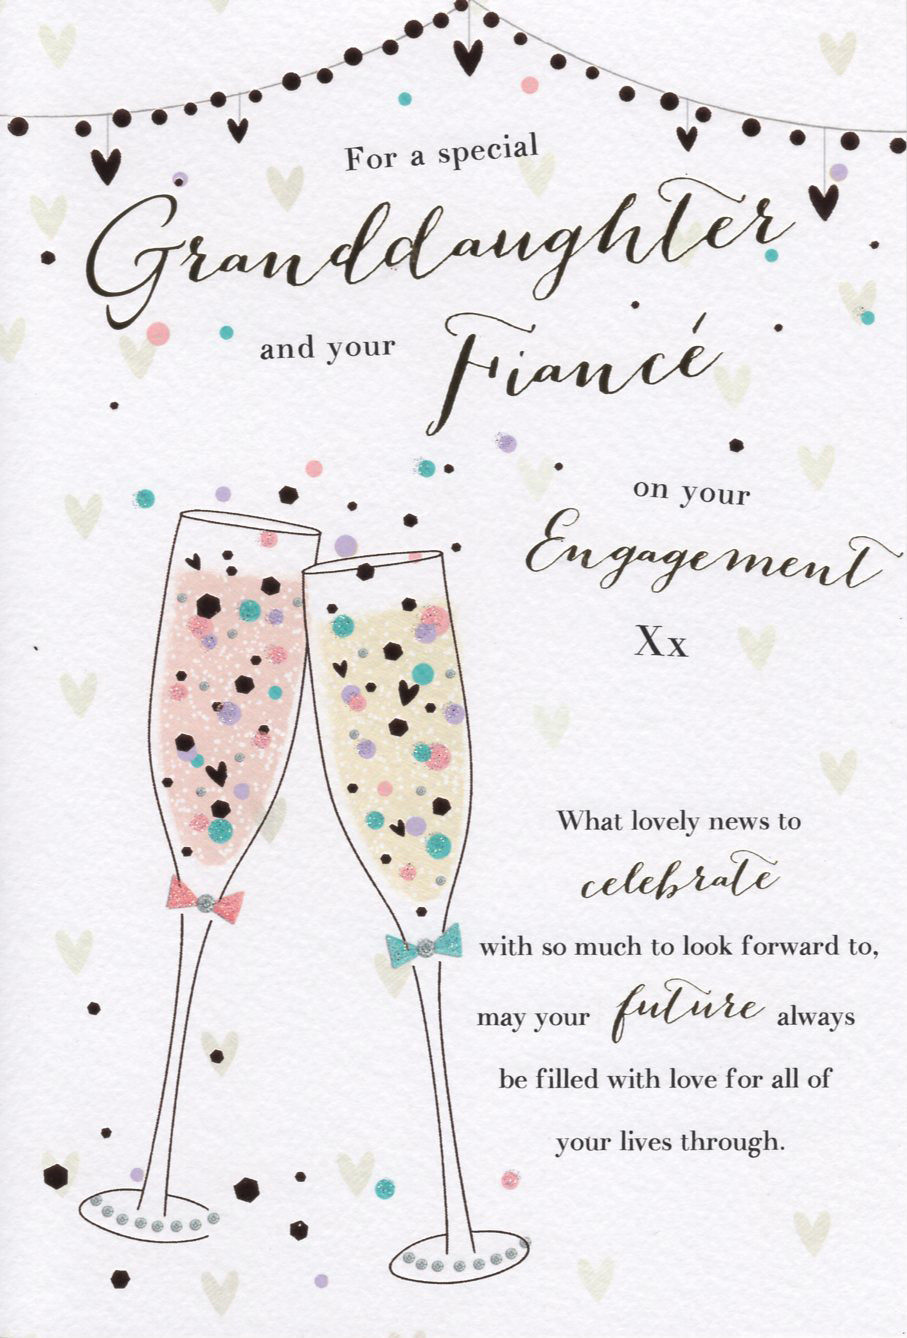 Engagement - Granddaughter & Fiance